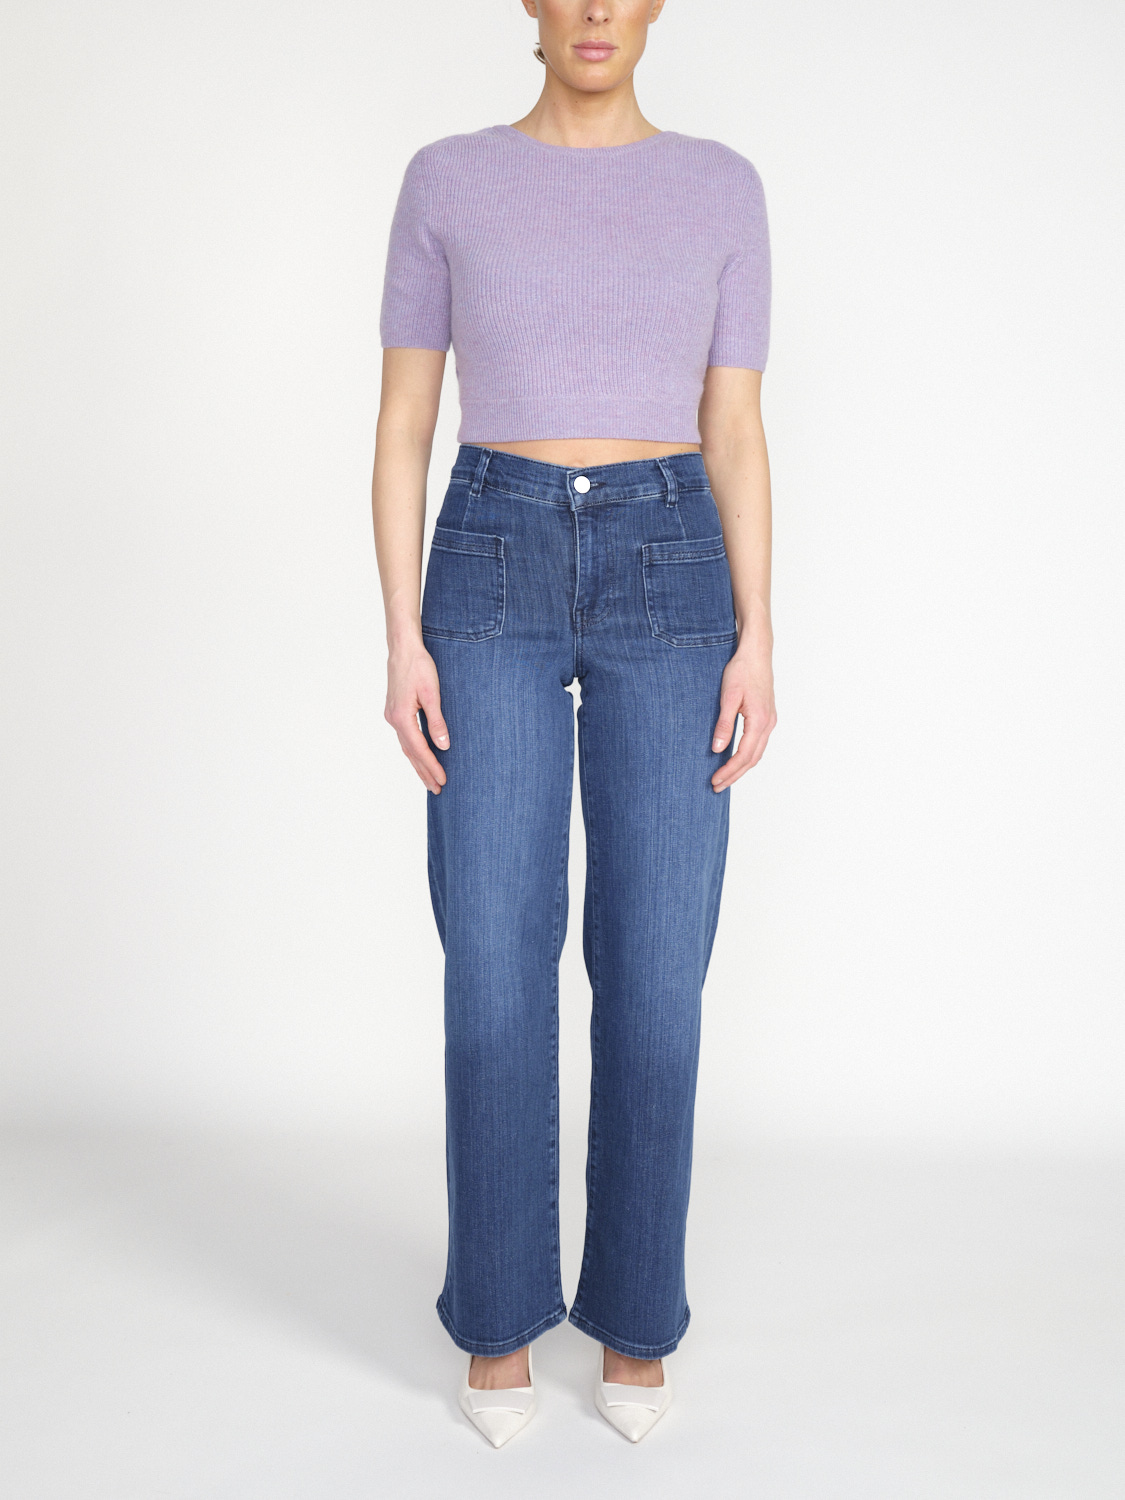 Lisa Yang Josefina – Kurzärmliger Cashmere-Pullover mit rückseitigem Cut-Out   lila XS/S